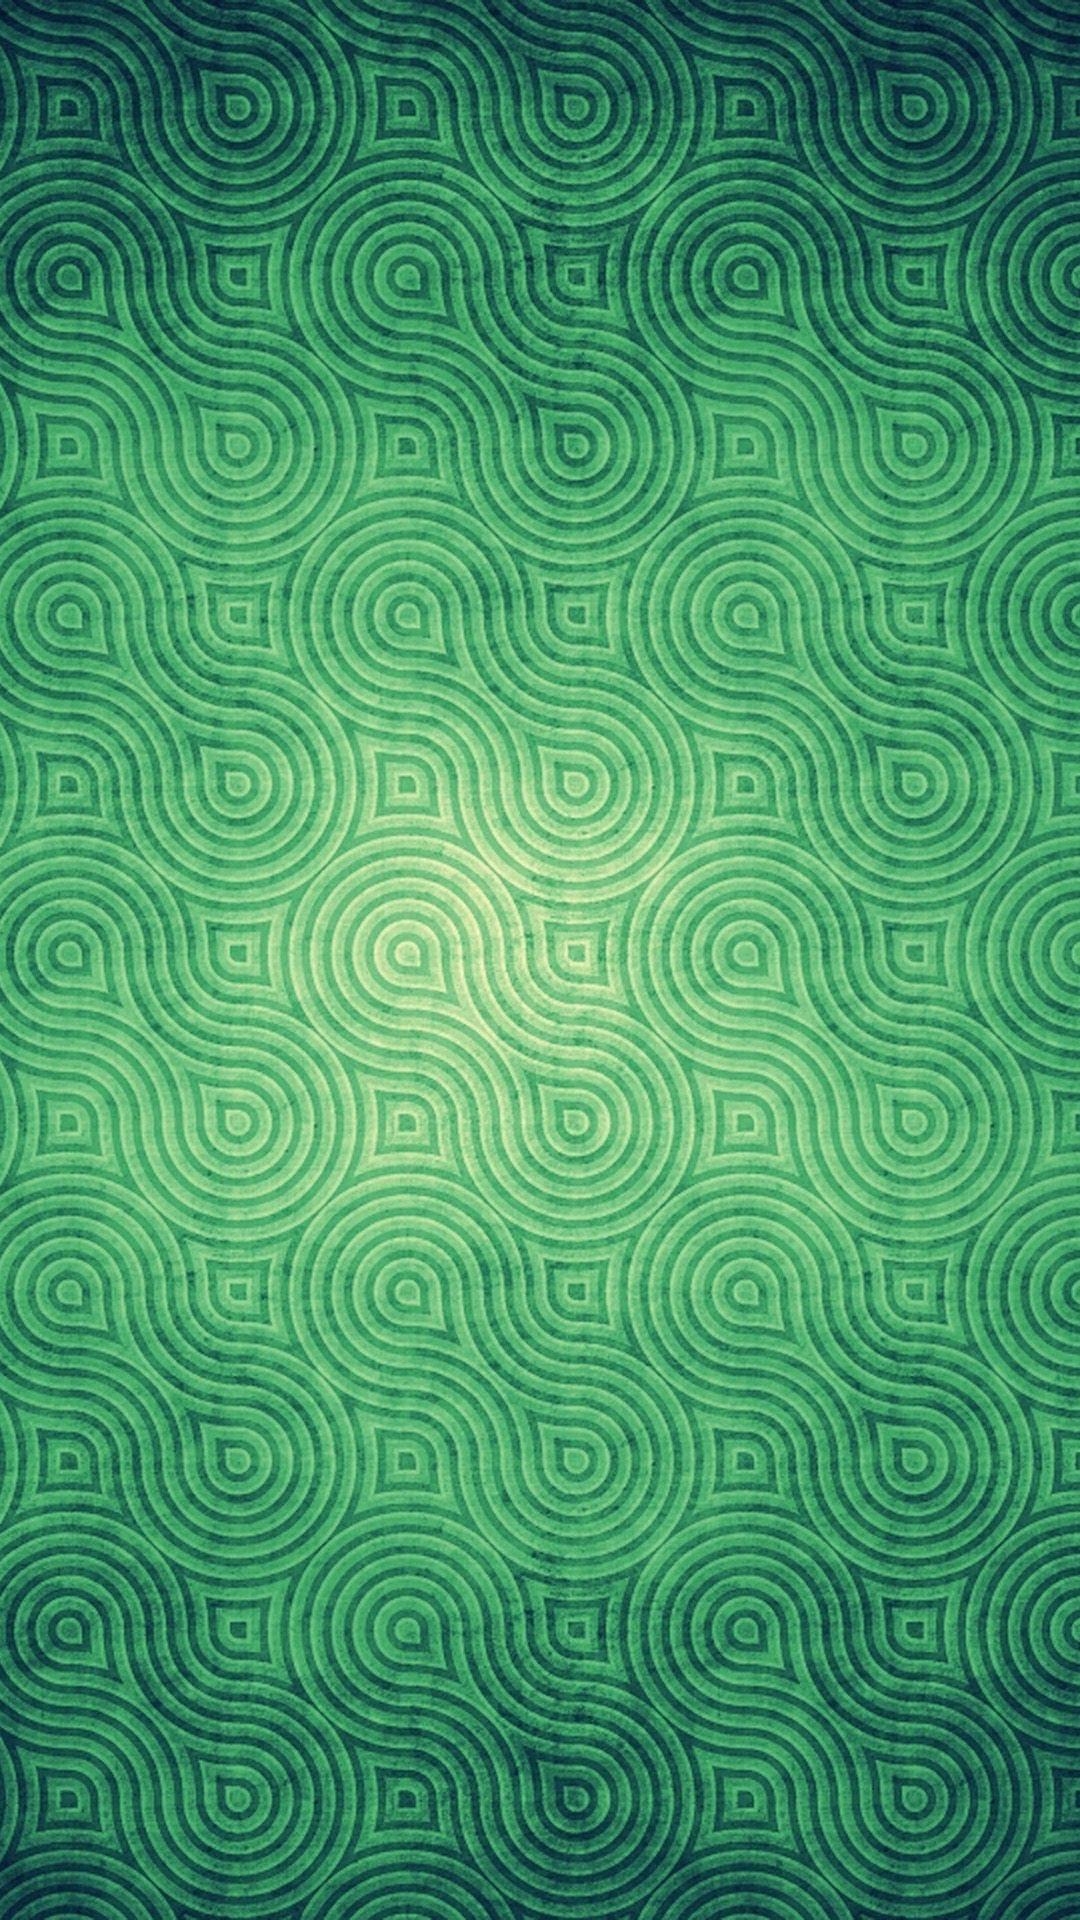 Background Green Loops HD Wallpaper iPhone 6 plus